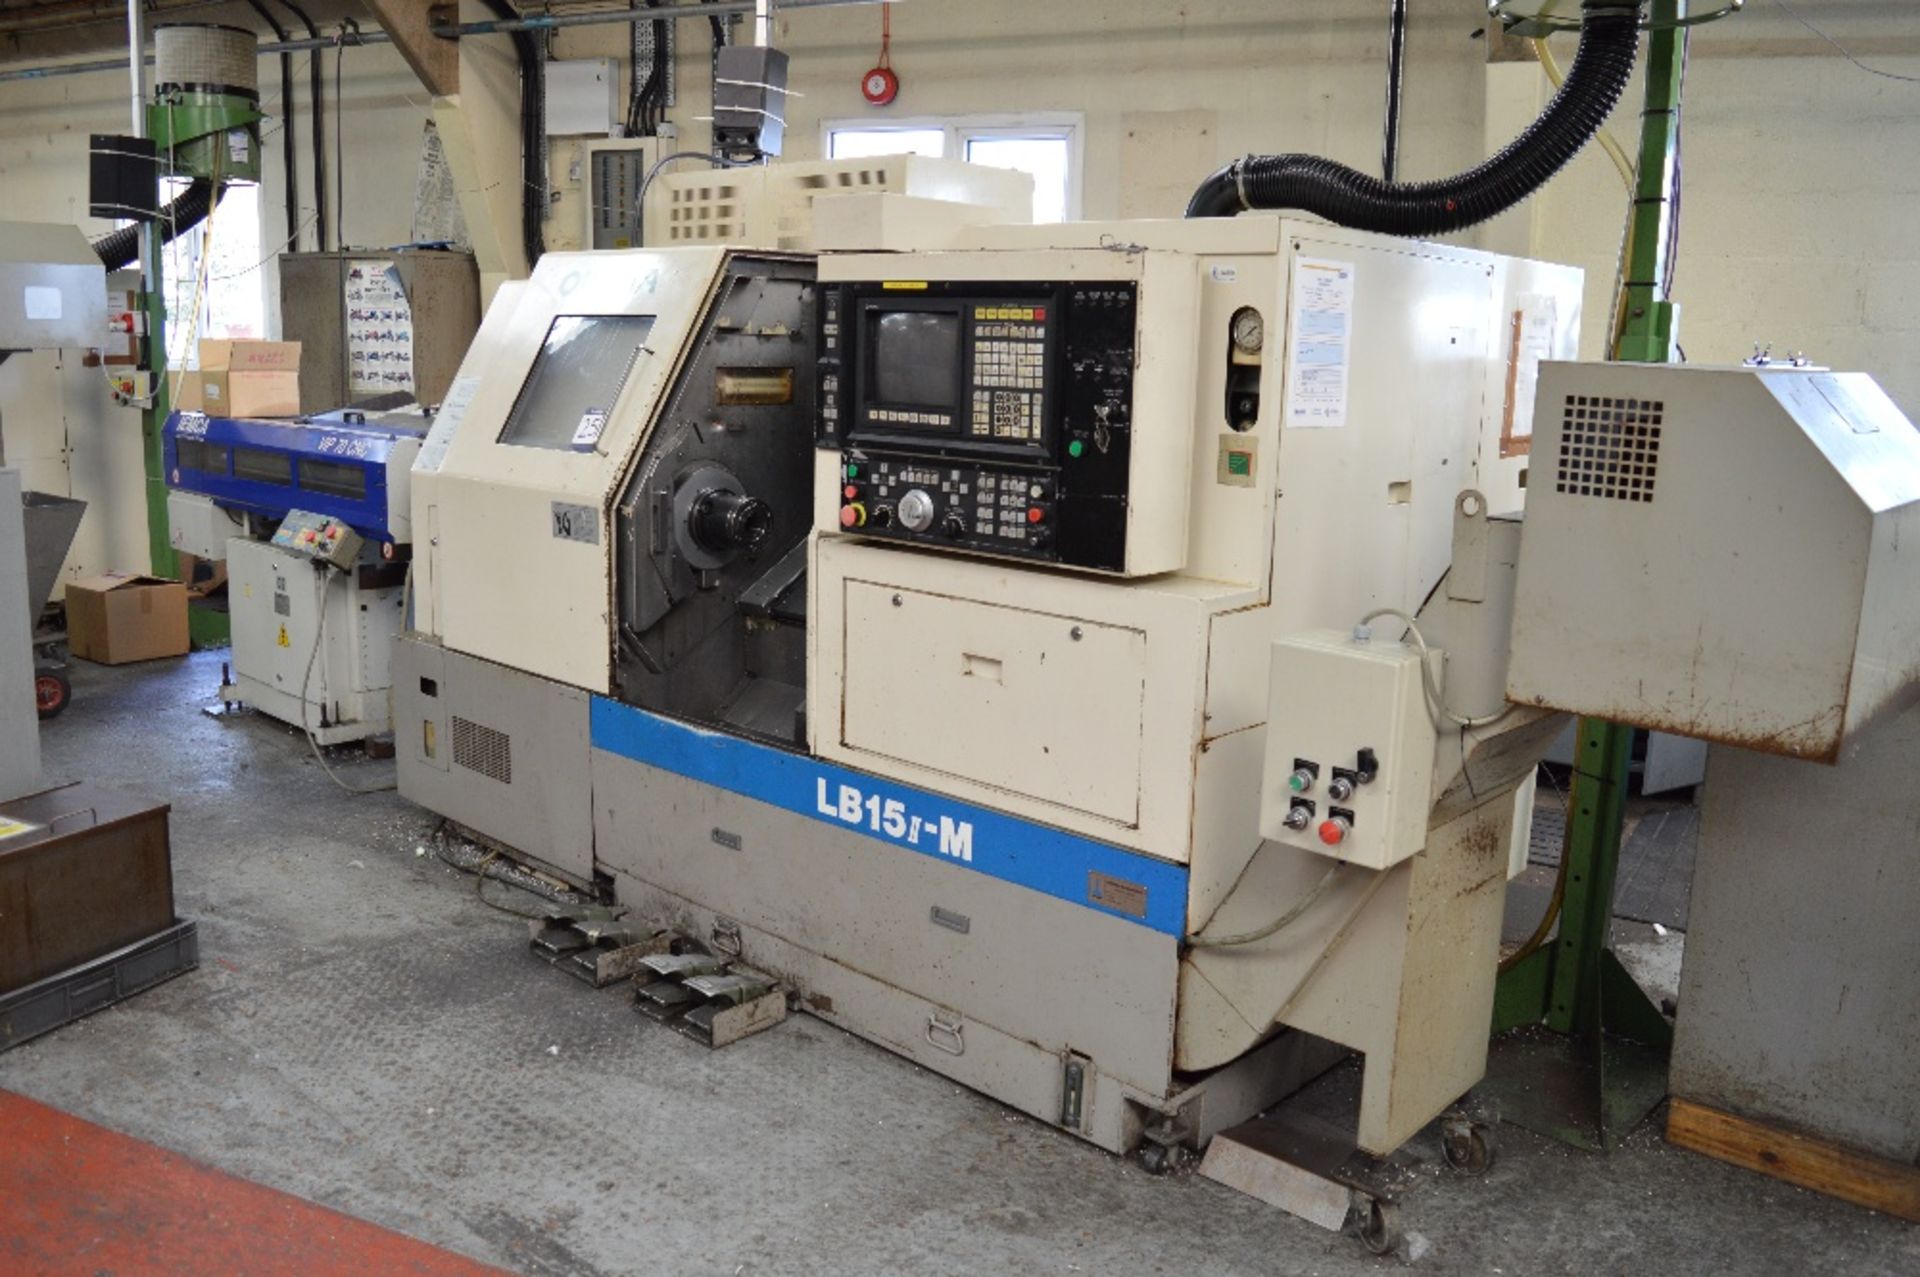 Okuma LB15 II-M CNC lathe
Serial no. 0605.1310
Max - Image 2 of 17